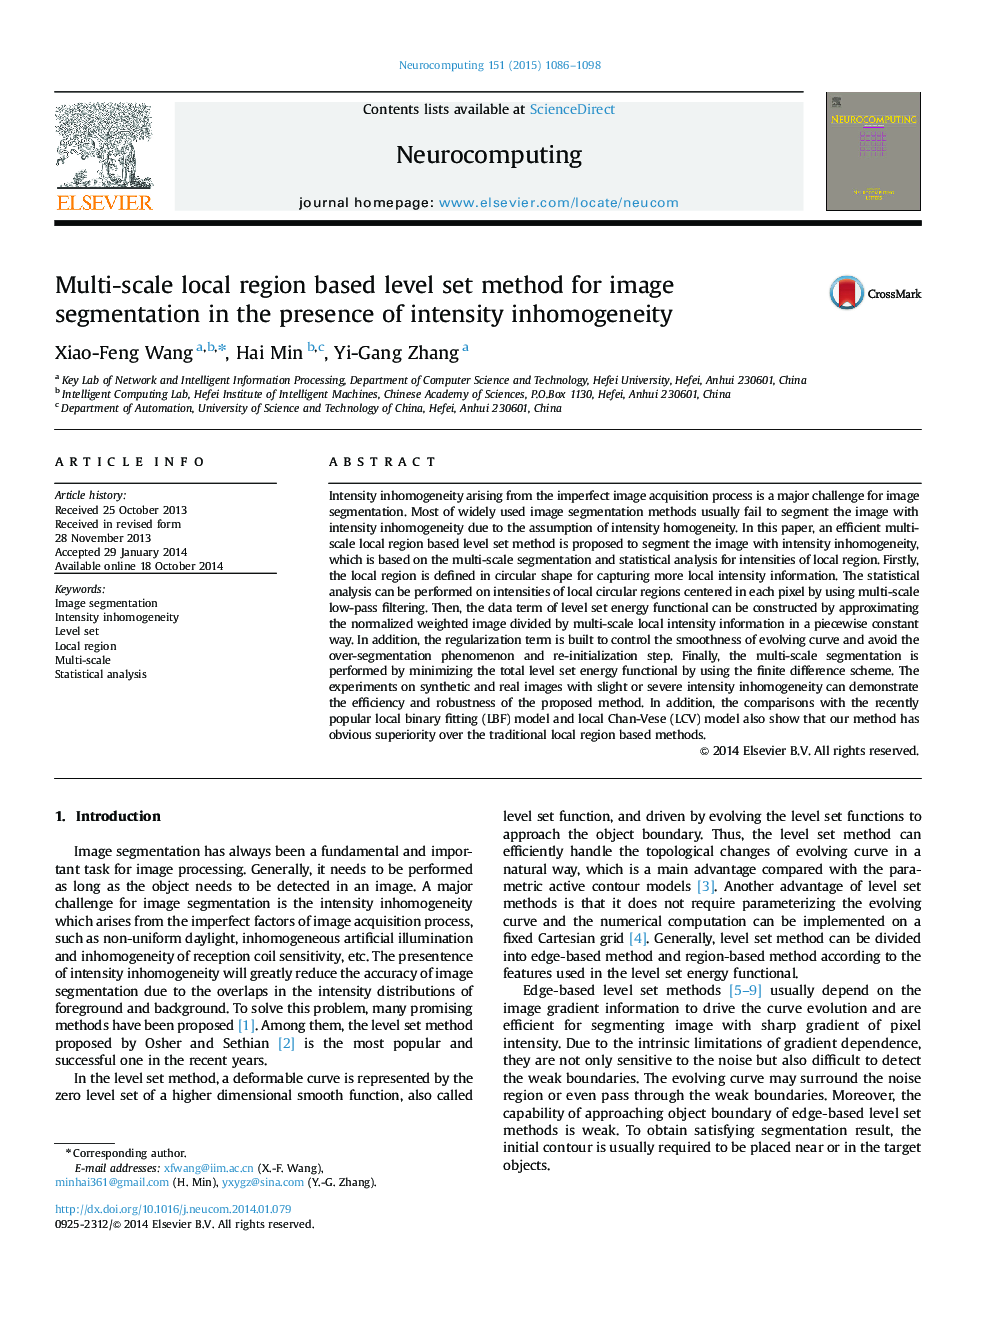 Multi-scale local region based level set method for image segmentation in the presence of intensity inhomogeneity